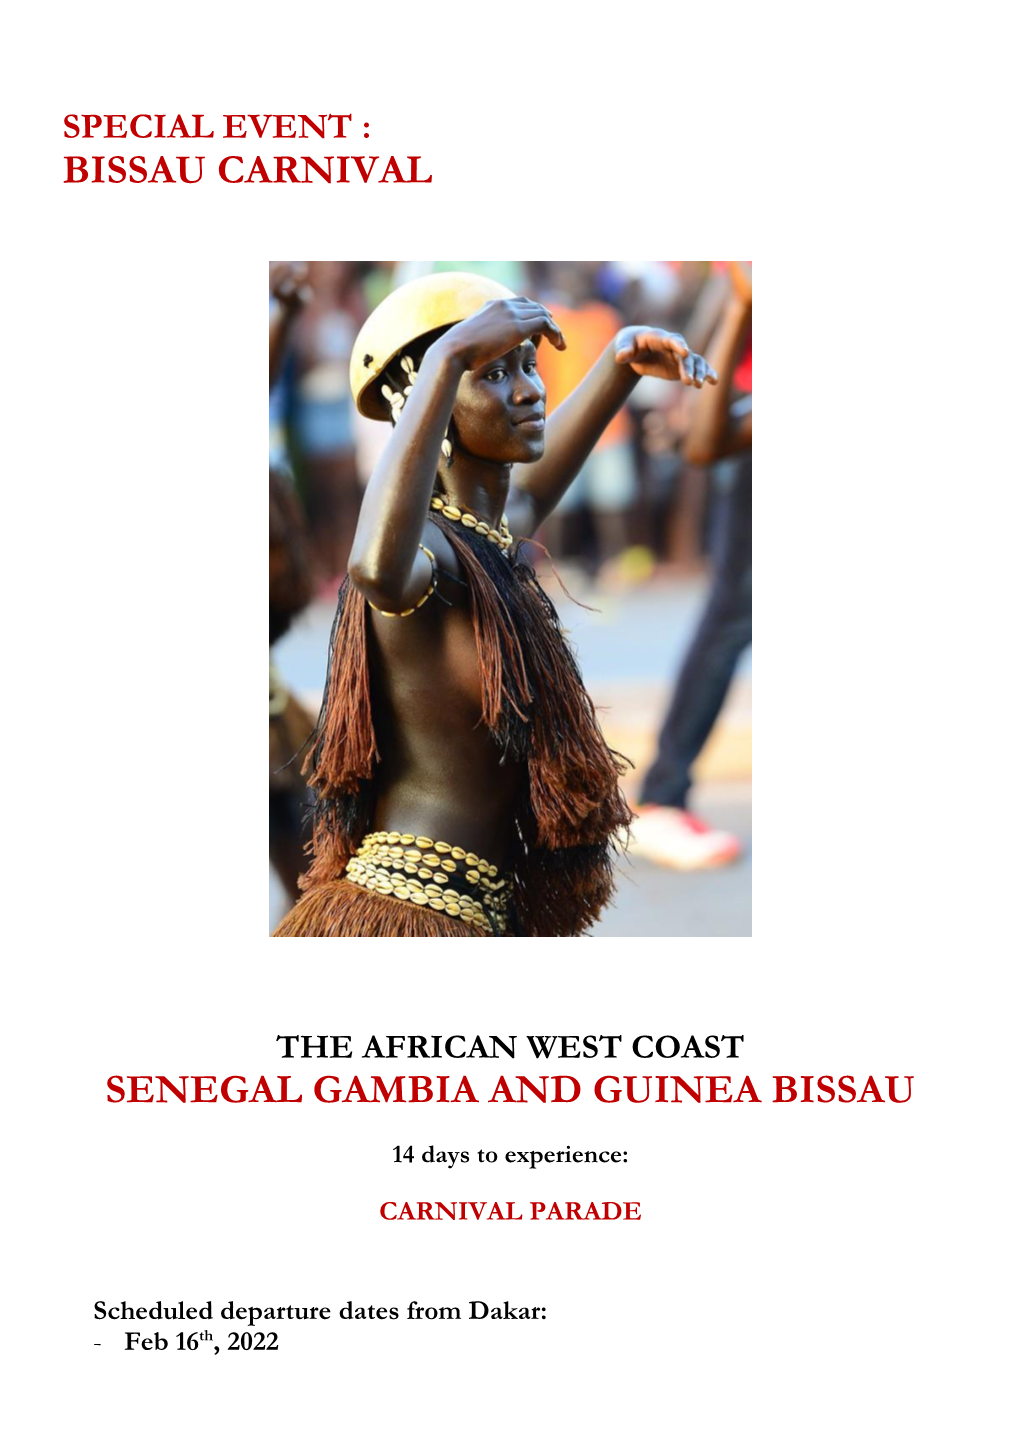 Bissau Carnival Senegal Gambia and Guinea Bissau